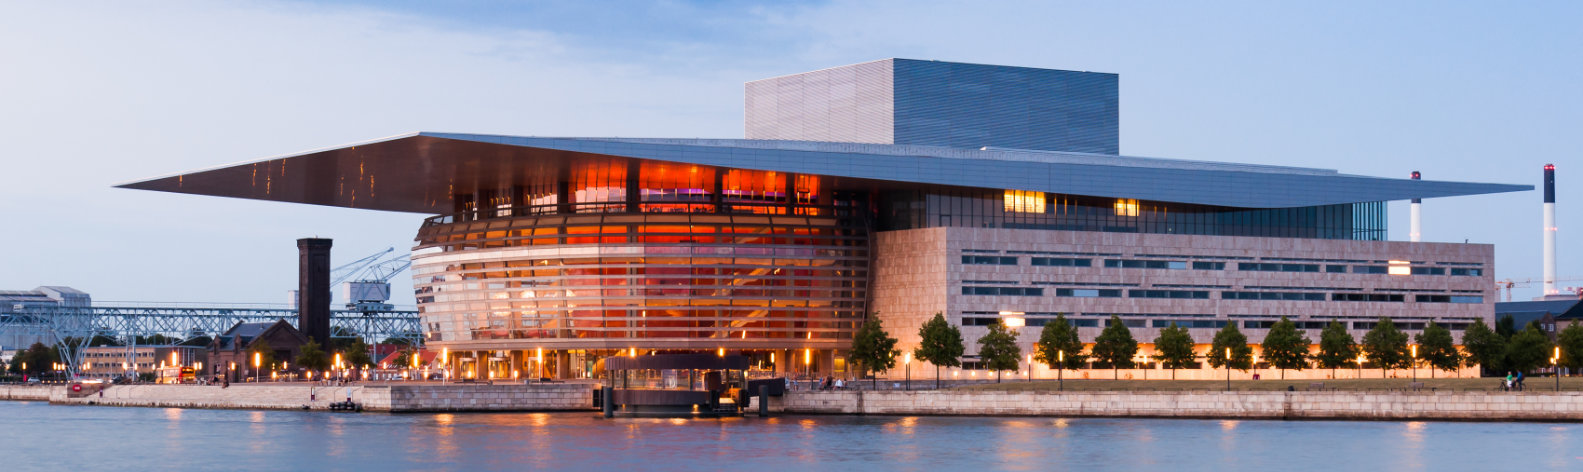 The Copenhagen Opera House